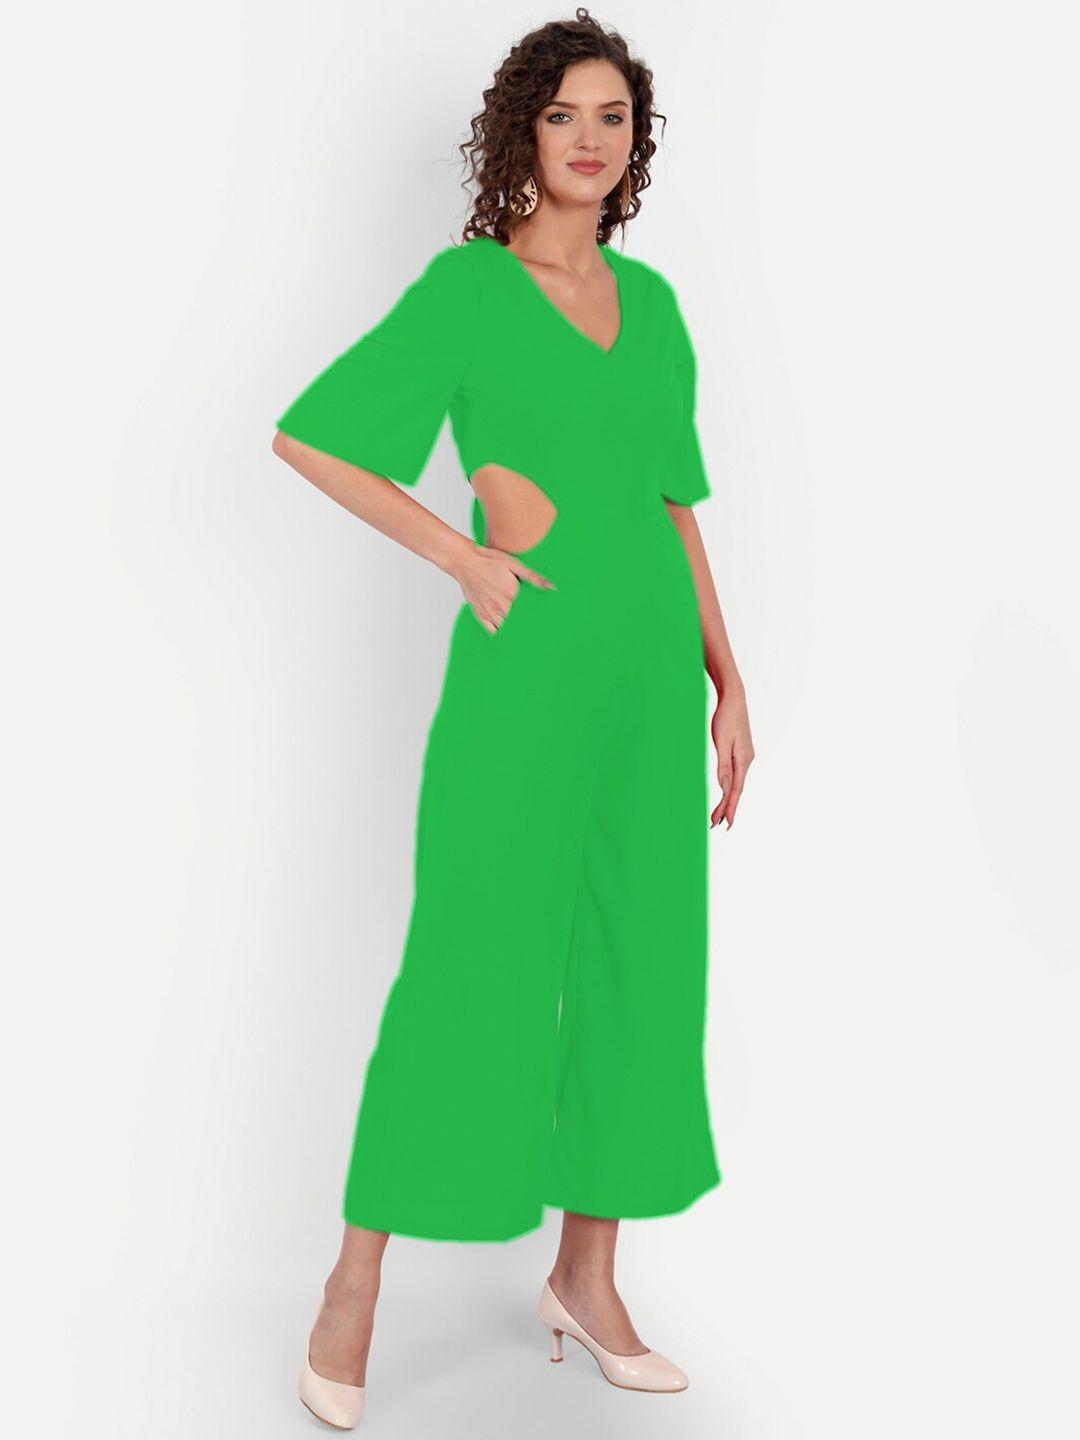 minglay green crepe a-line dress